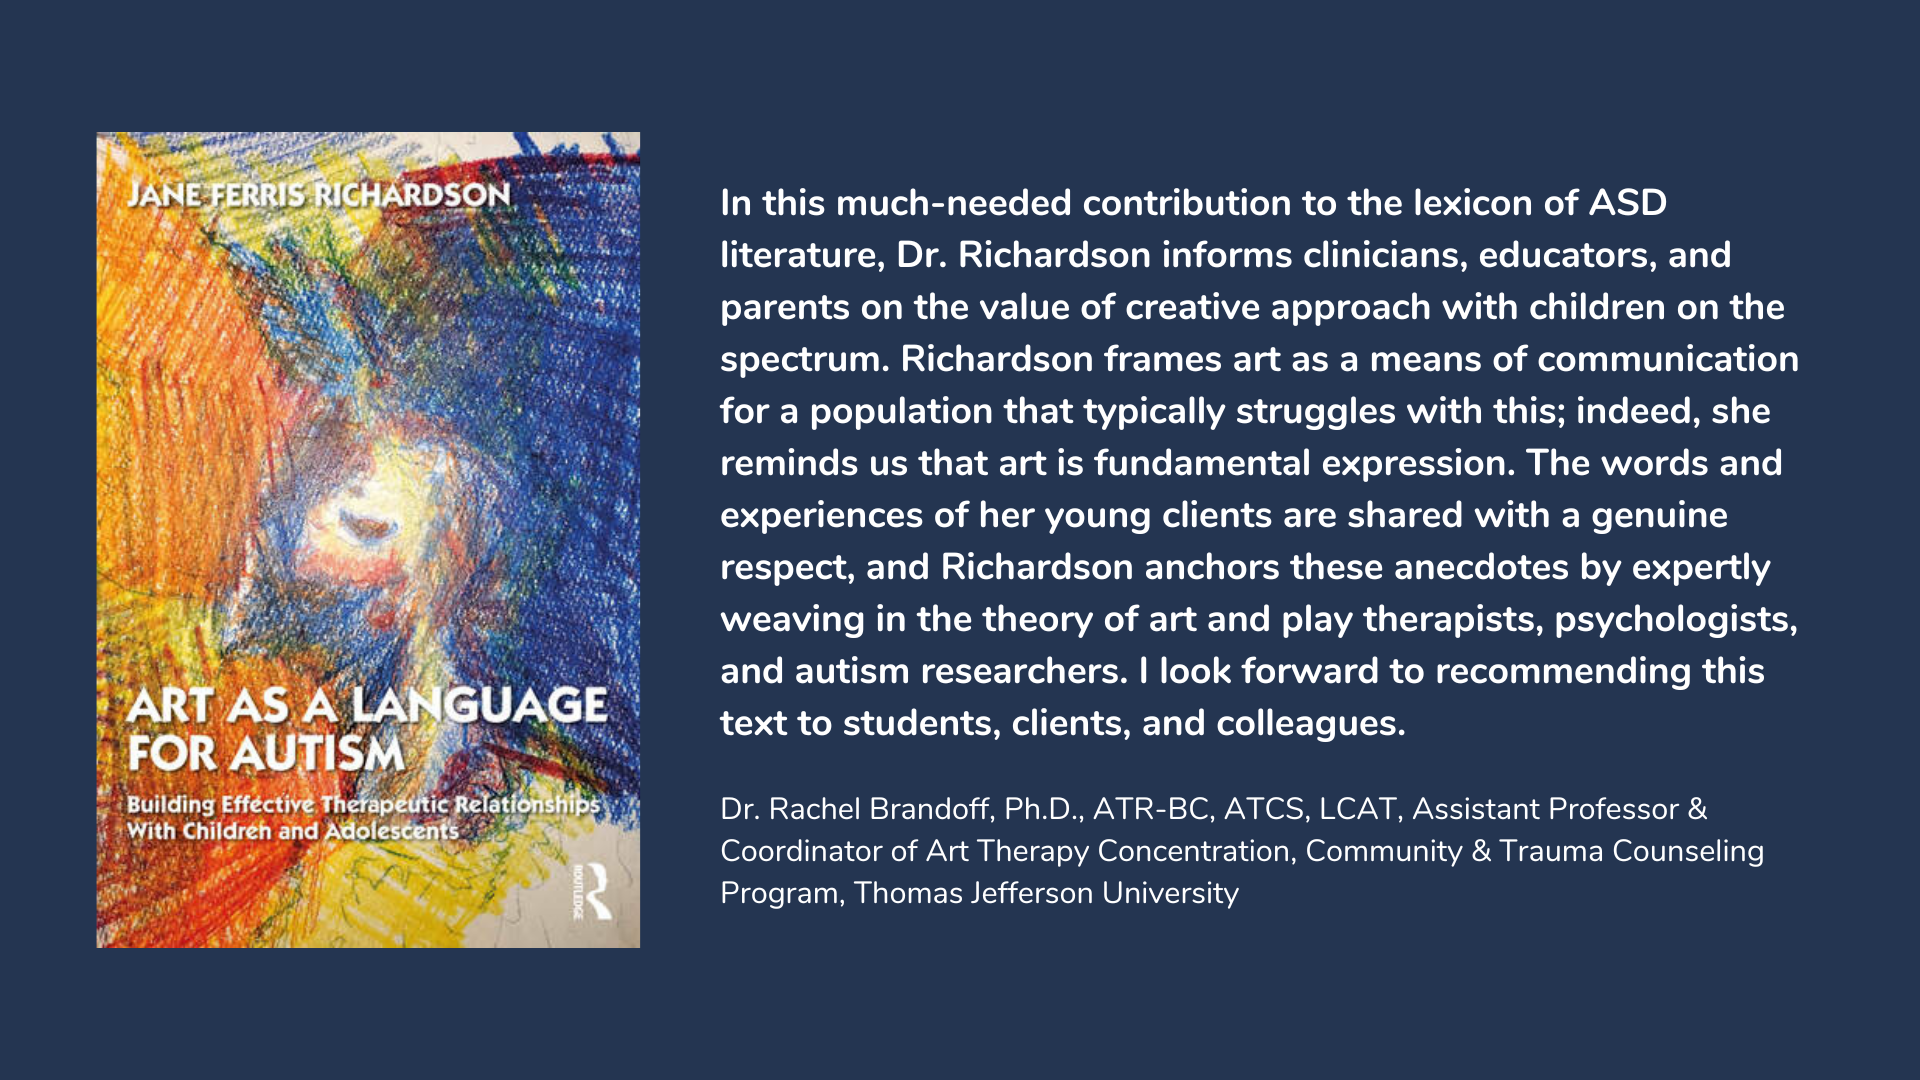 Art as a Language for Autism, book cover and description.